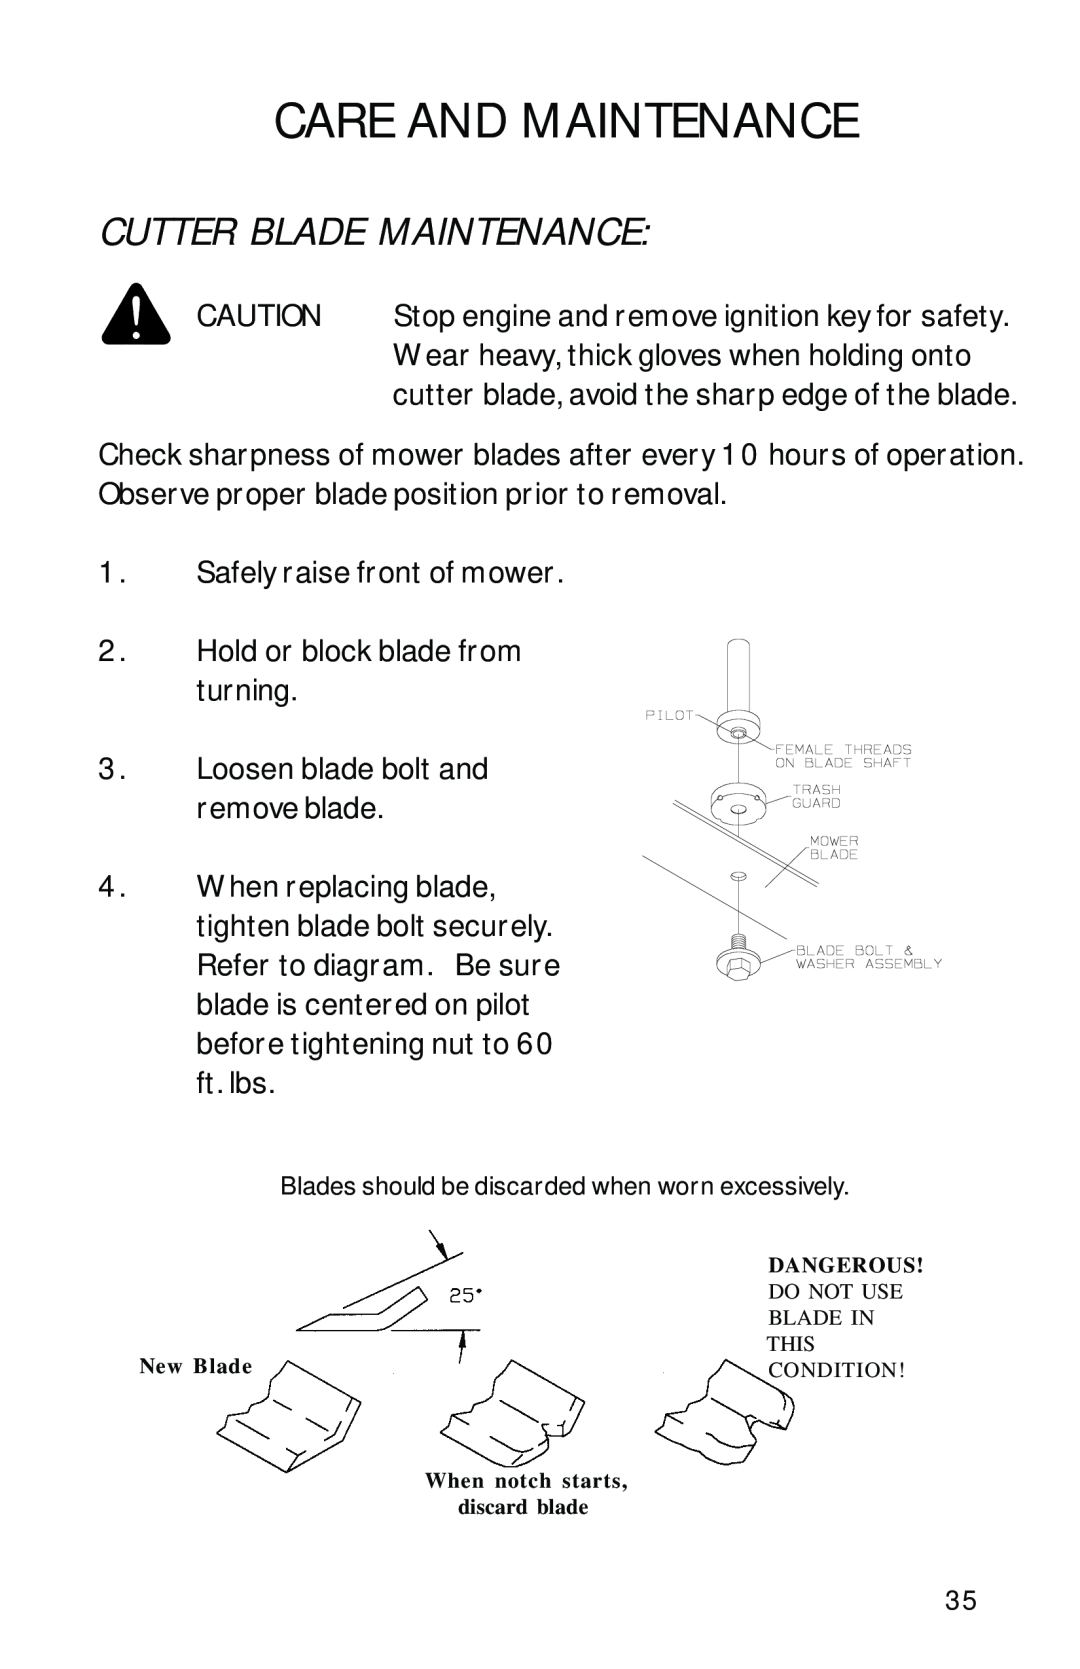 Dixon 1950-2300 Series manual Cutter Blade Maintenance, Care And Maintenance 